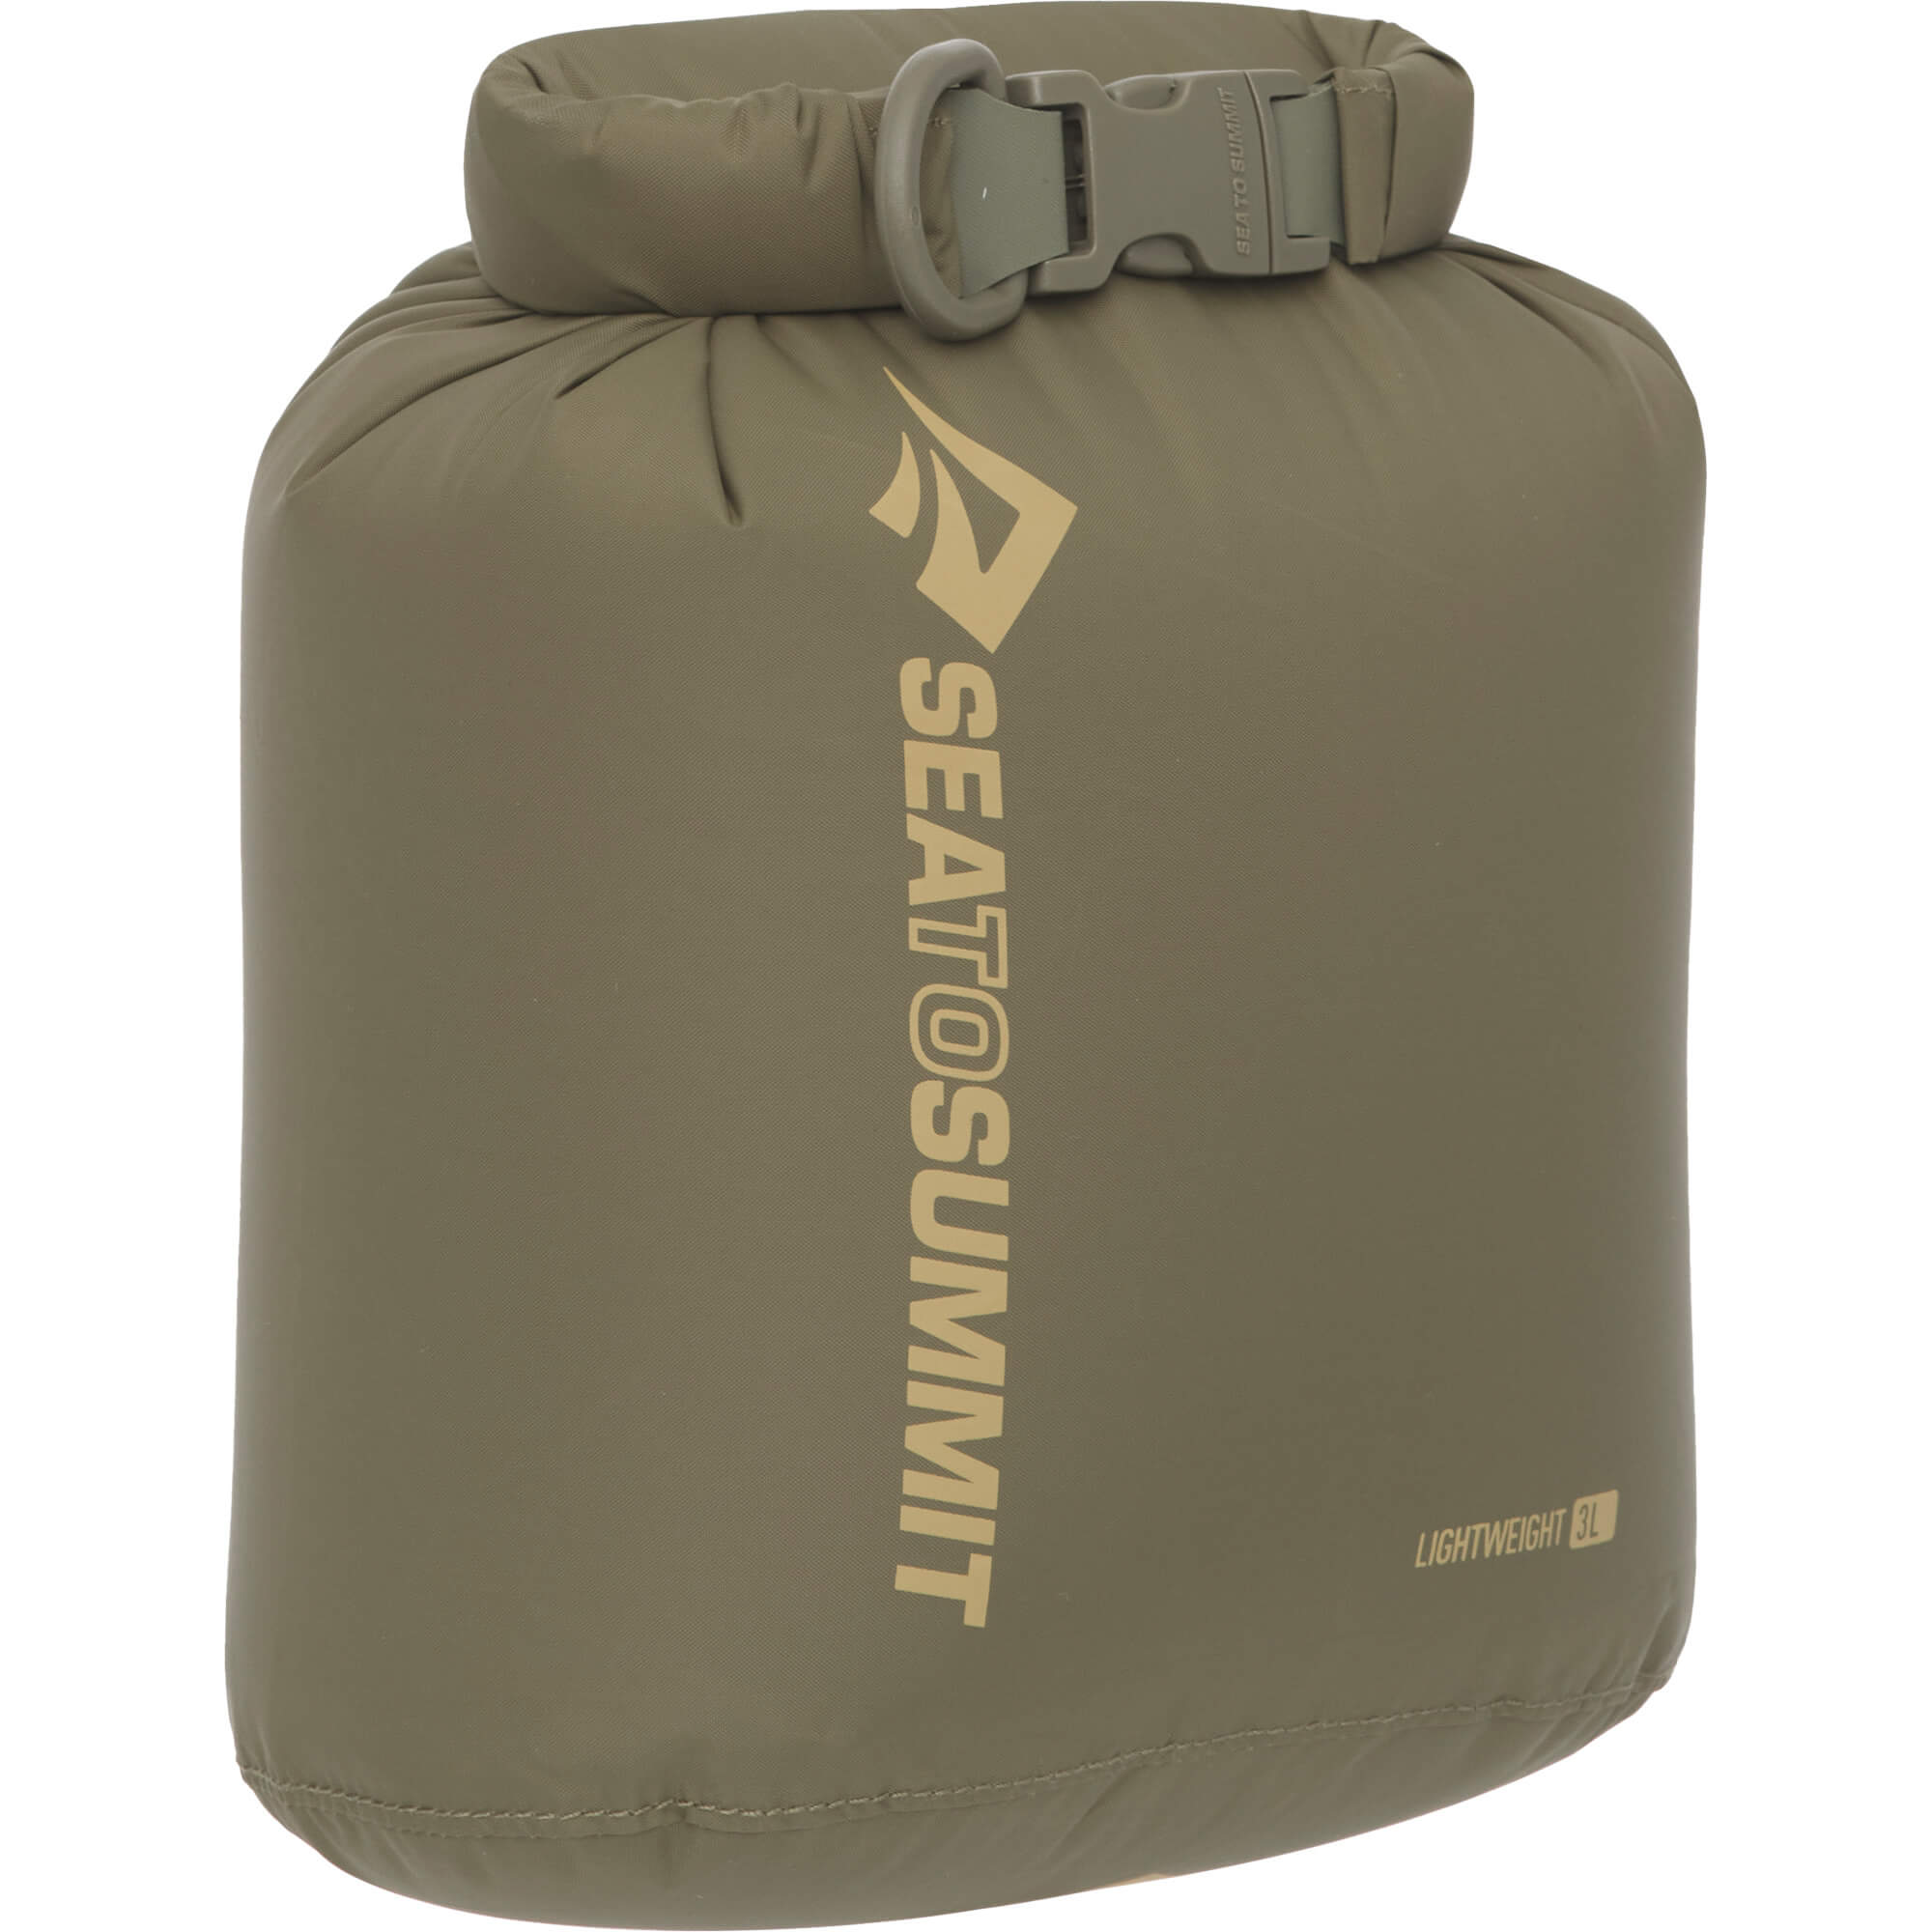 Sea to Summit Lightweight Dry Bag 3L Waterproof Gear Sack